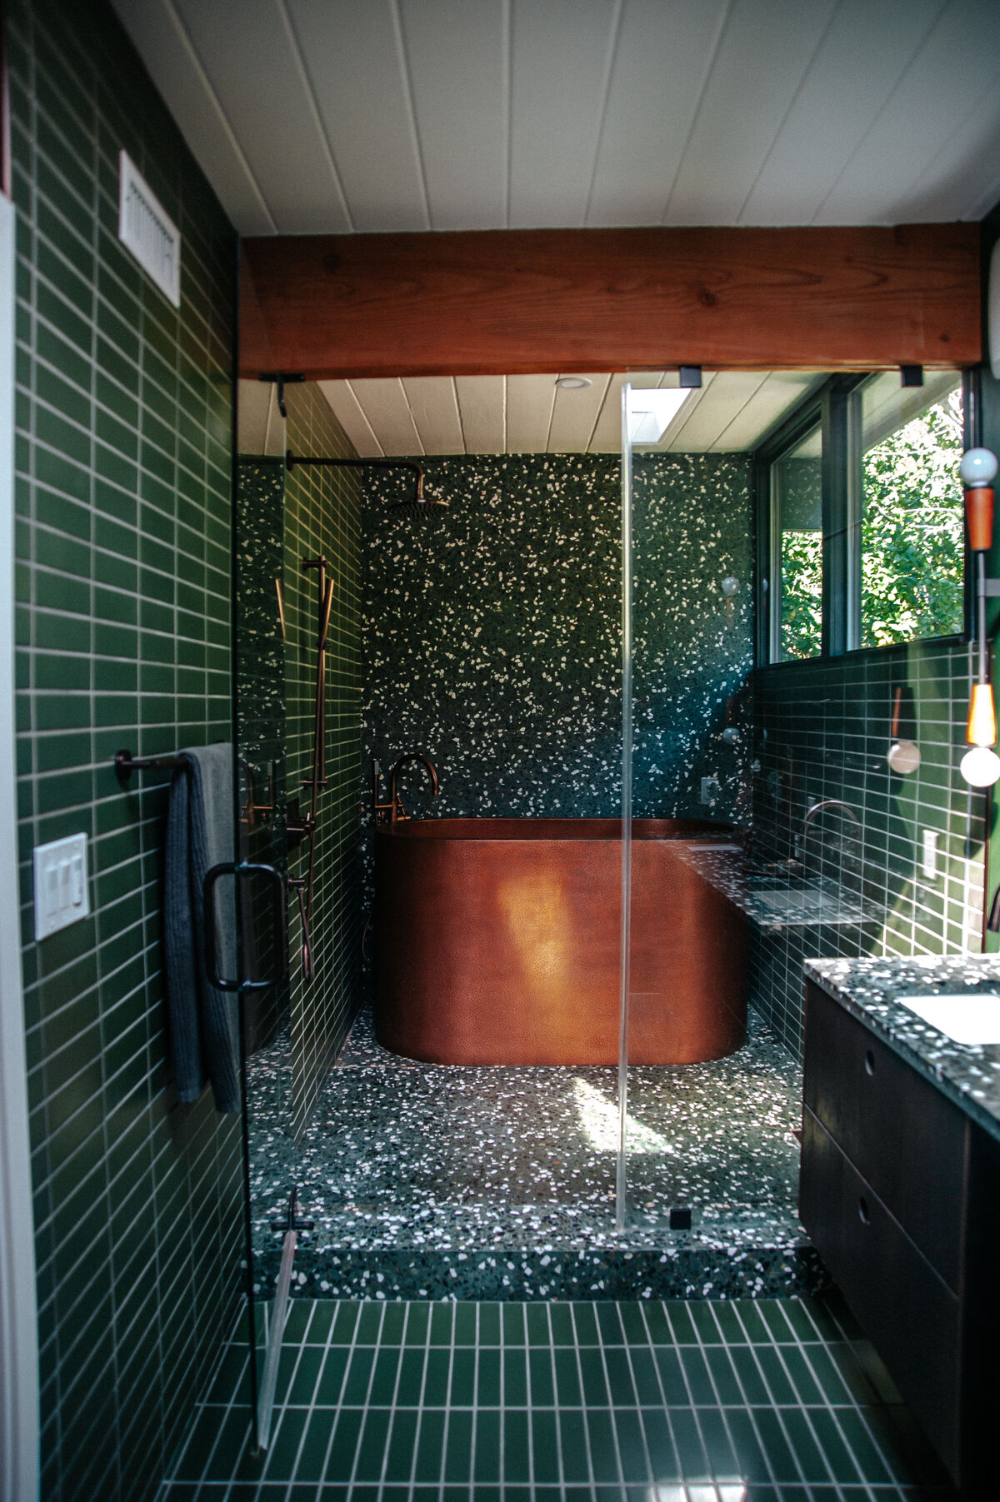 Bathroom Tile Ideas – Bath Tile
  Backsplash and Floor Designs